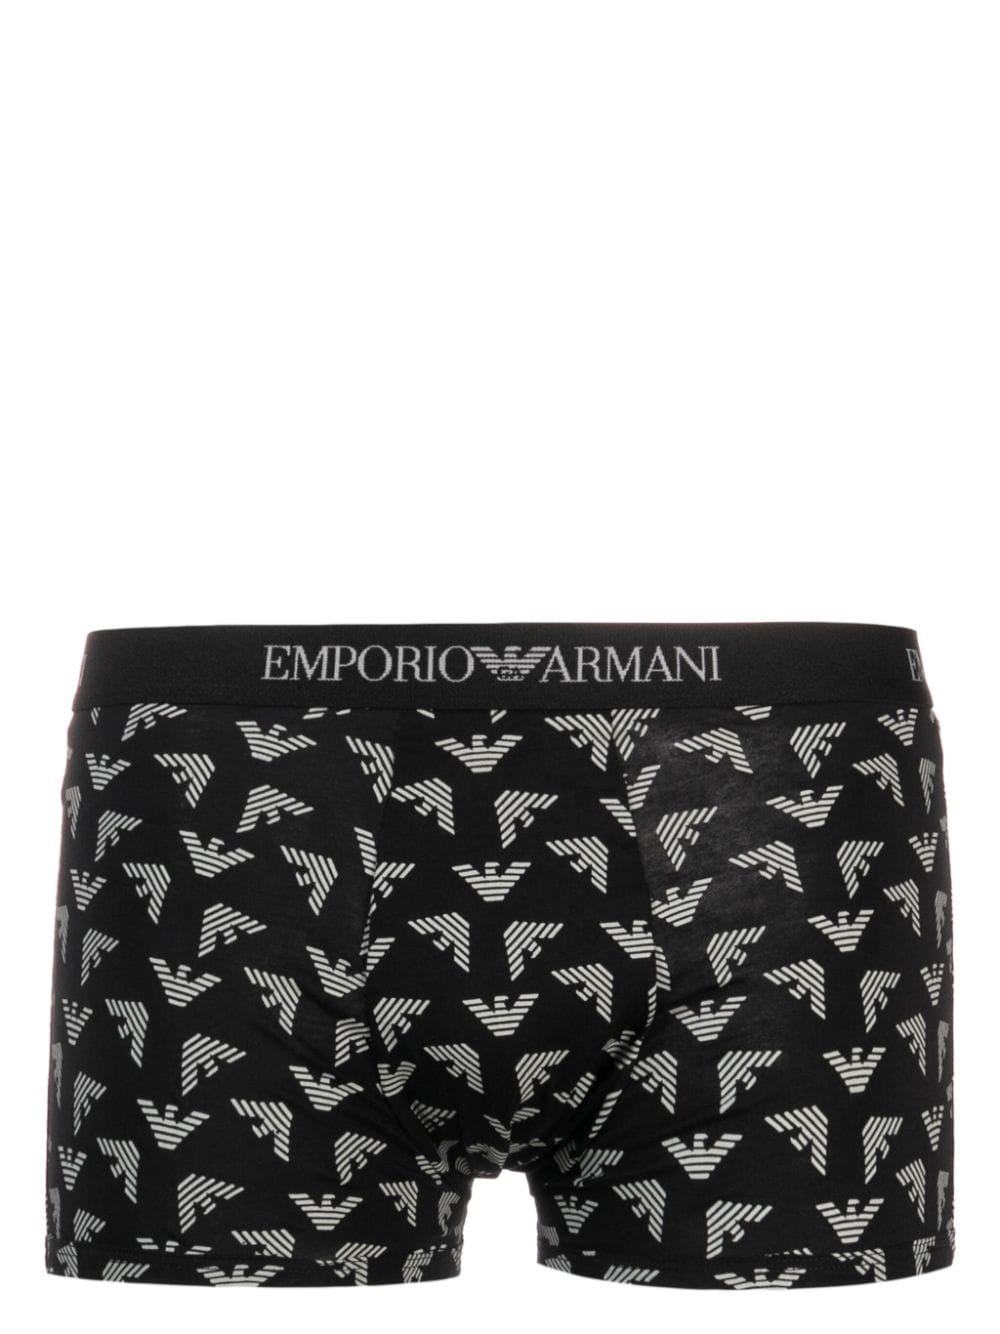 Image 2 of Emporio Armani logo-waistband cotton briefs (pack of three)